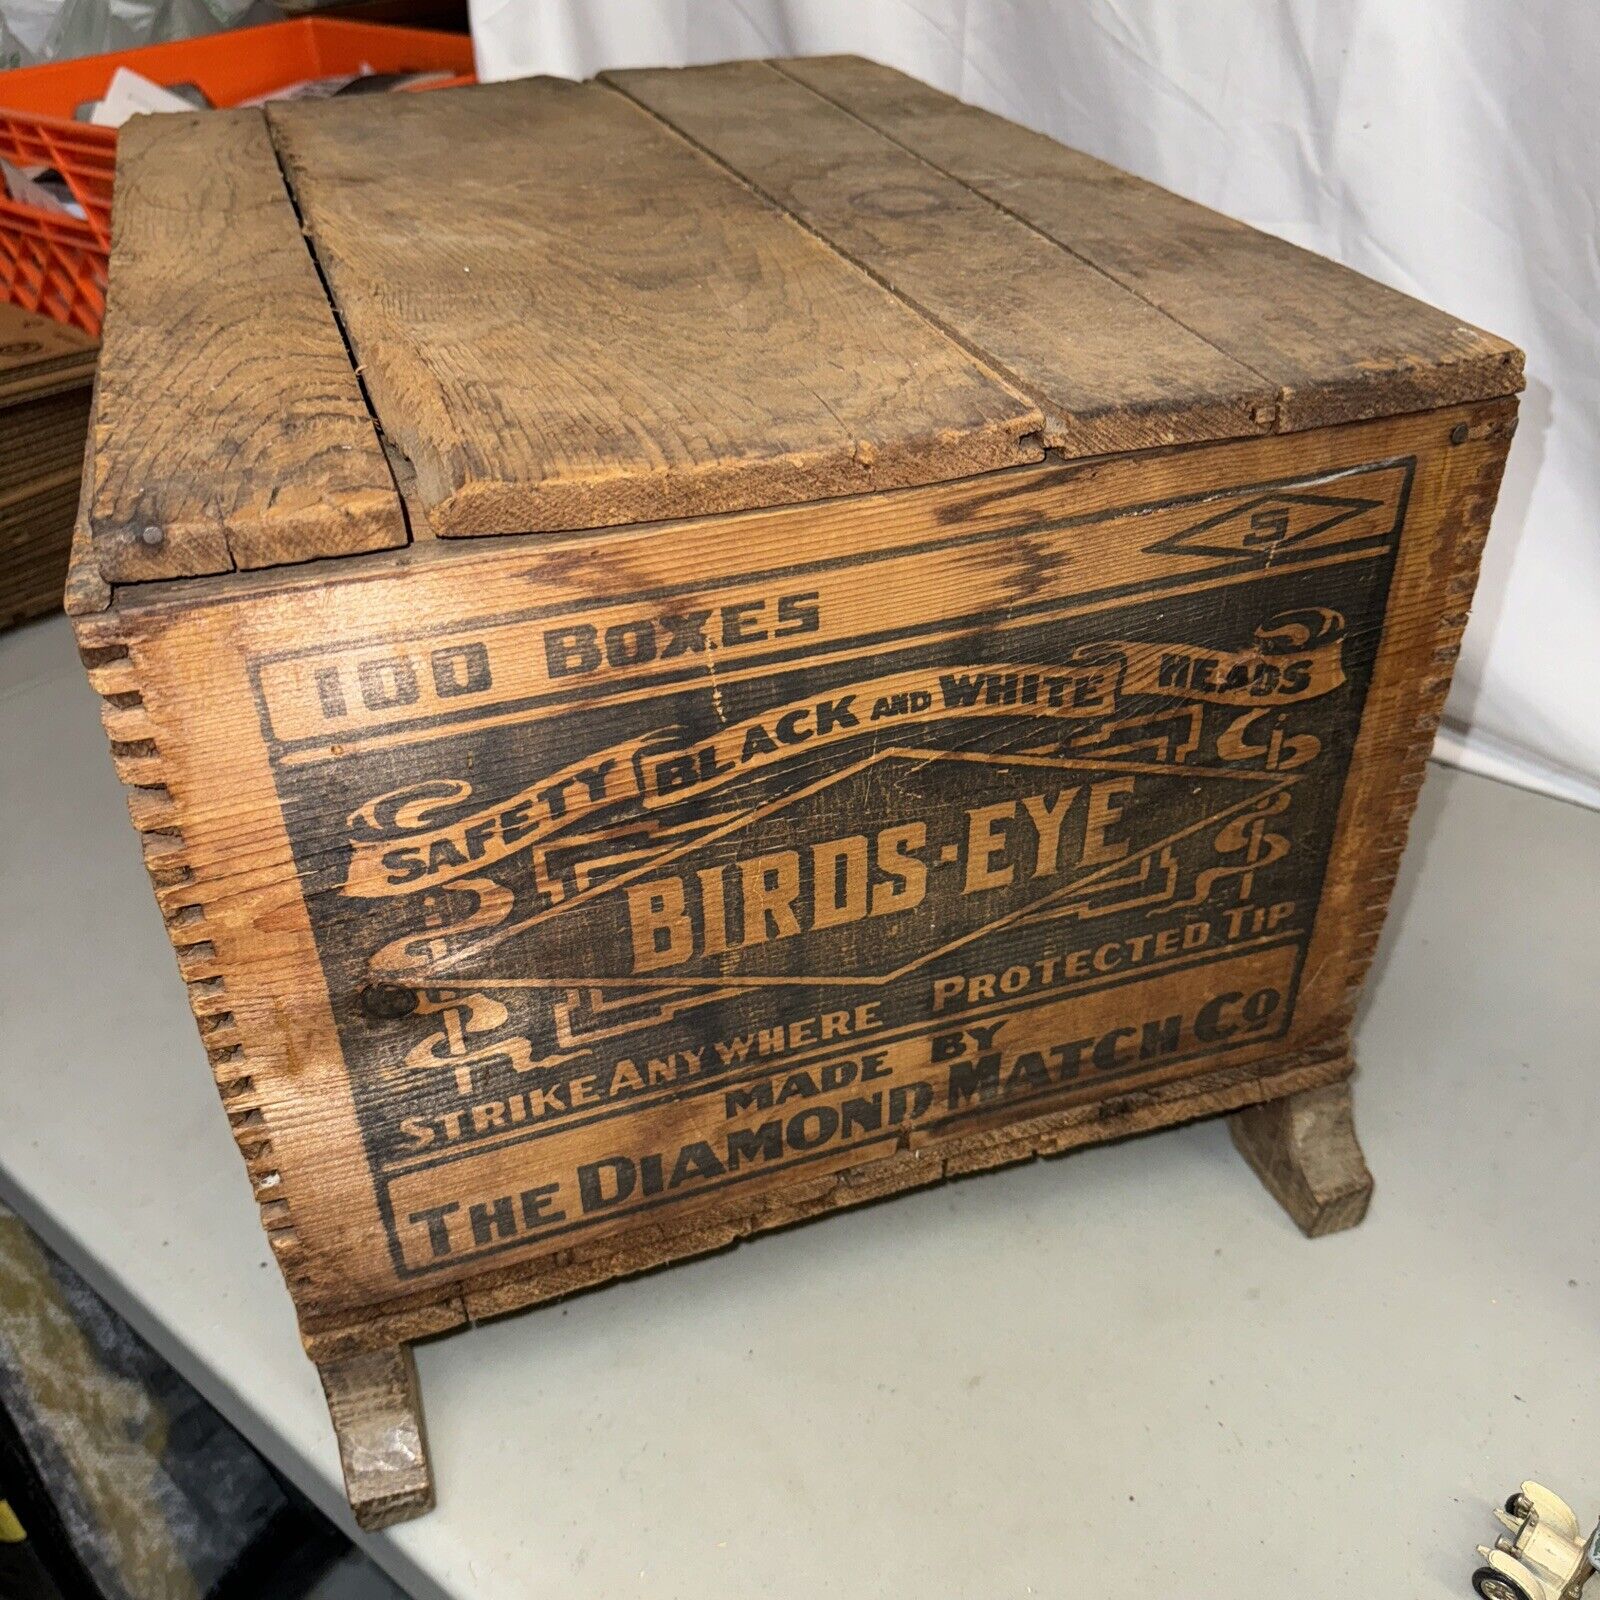 Rare Vintage Bird\'s Eye The Diamond Match Co. Wooden Advertising Crate Sign Box